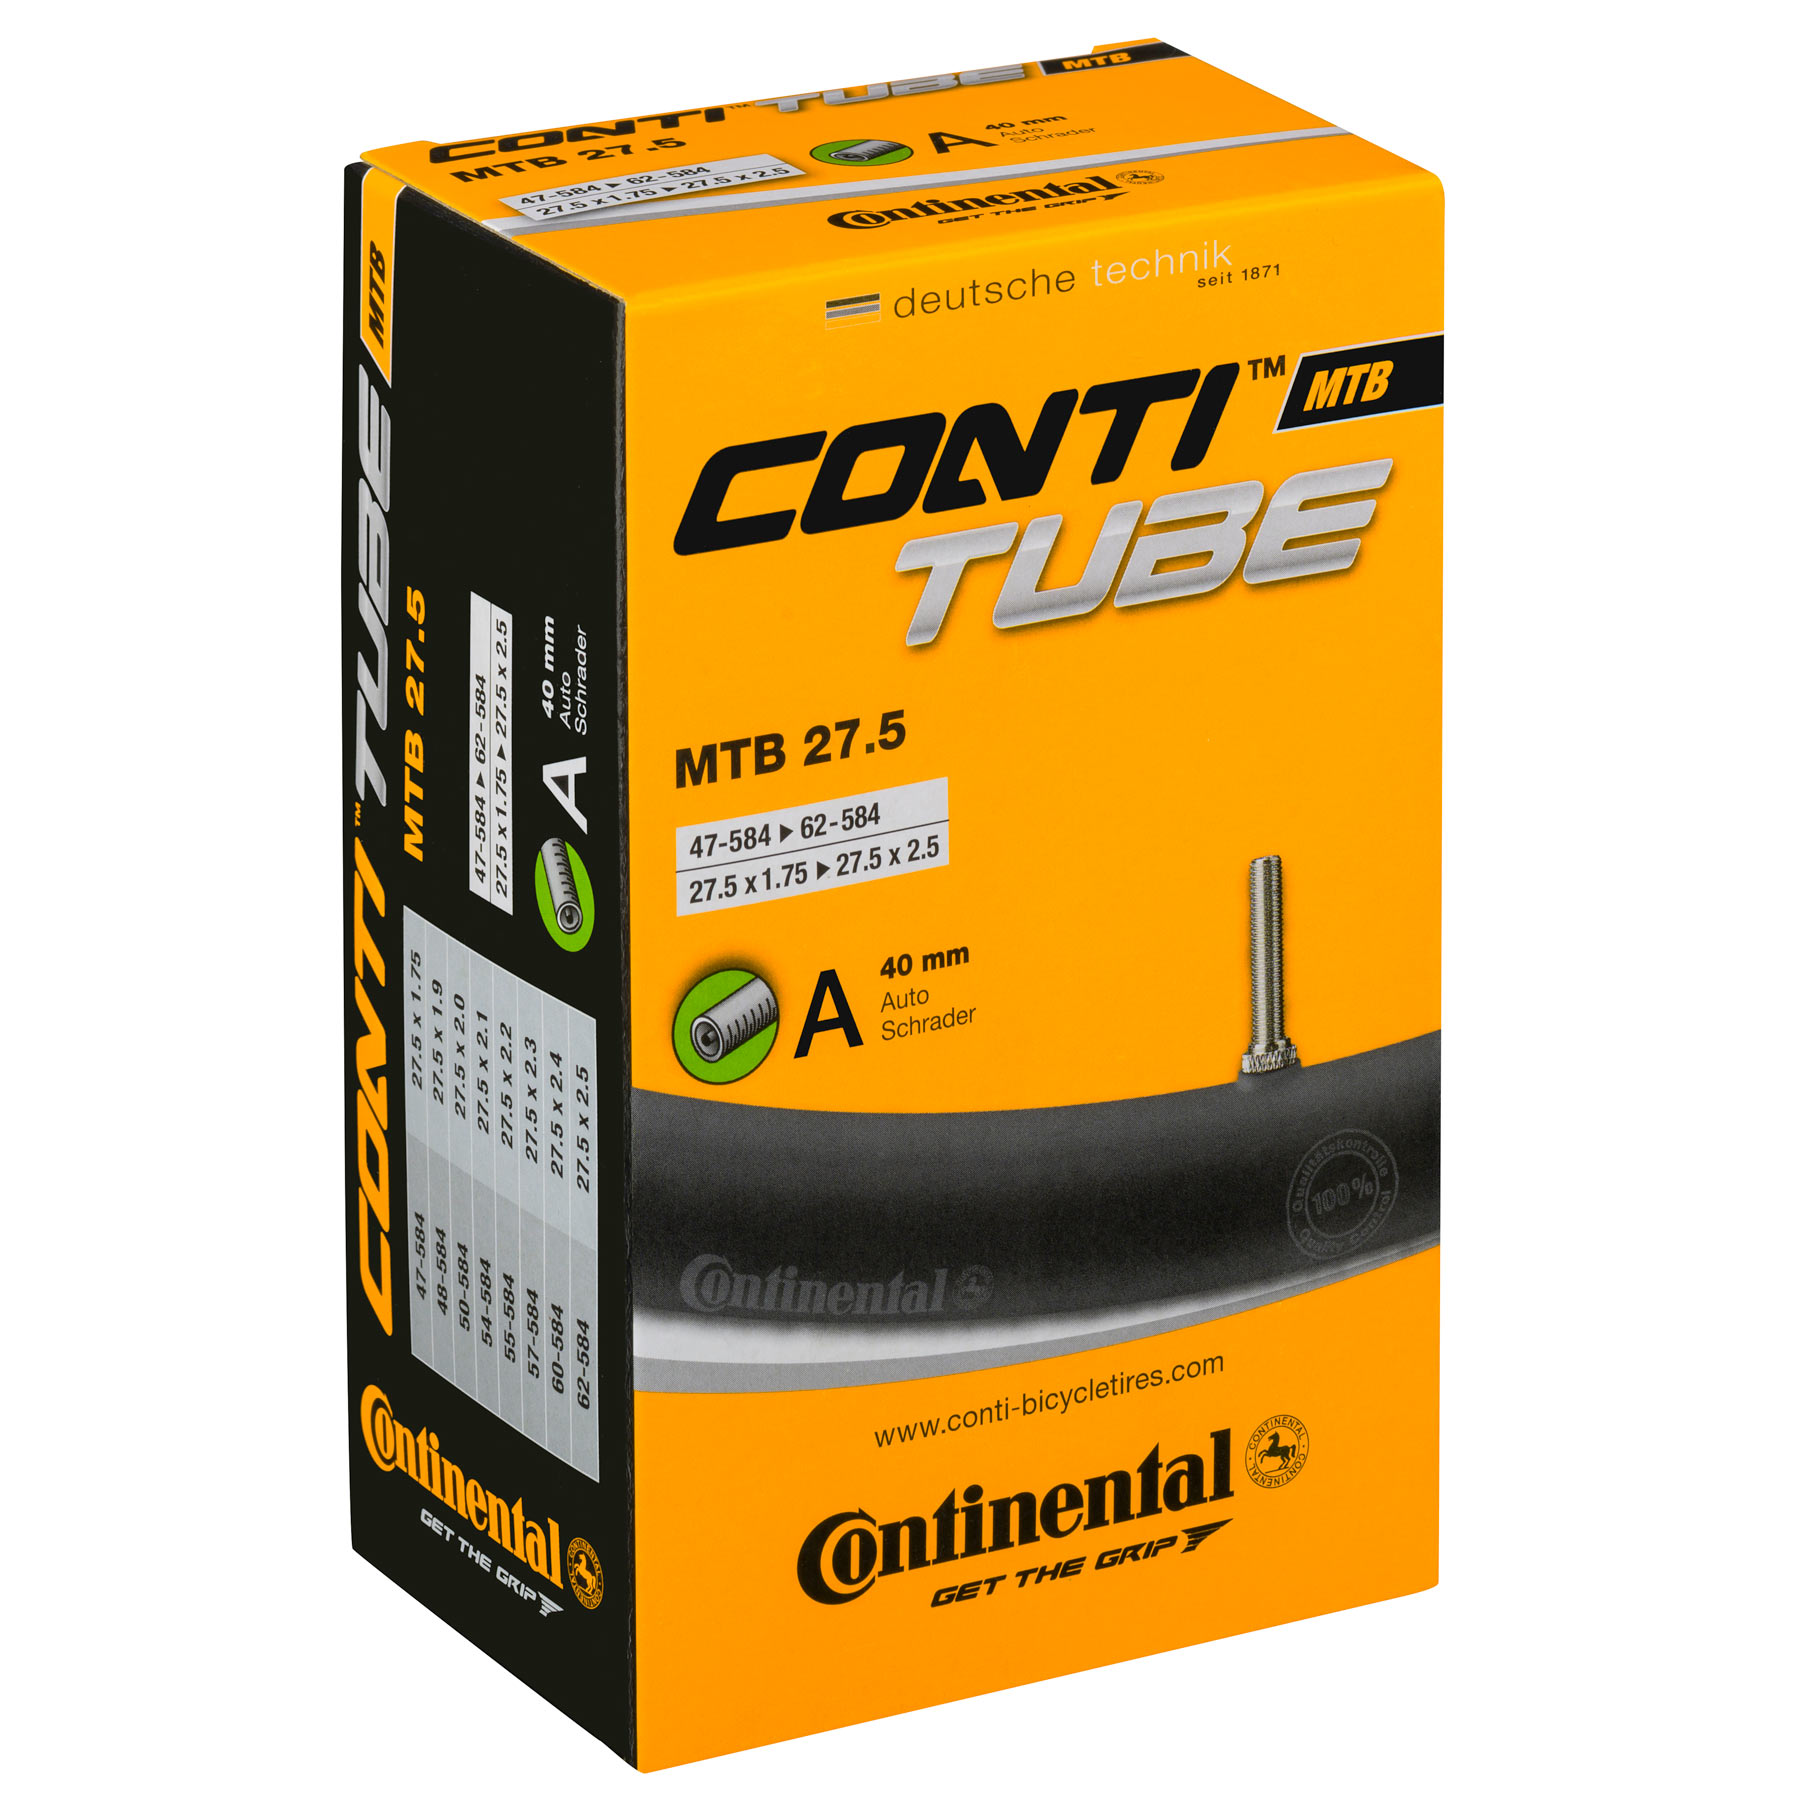 Productfoto van Continental MTB 27.5 Tube